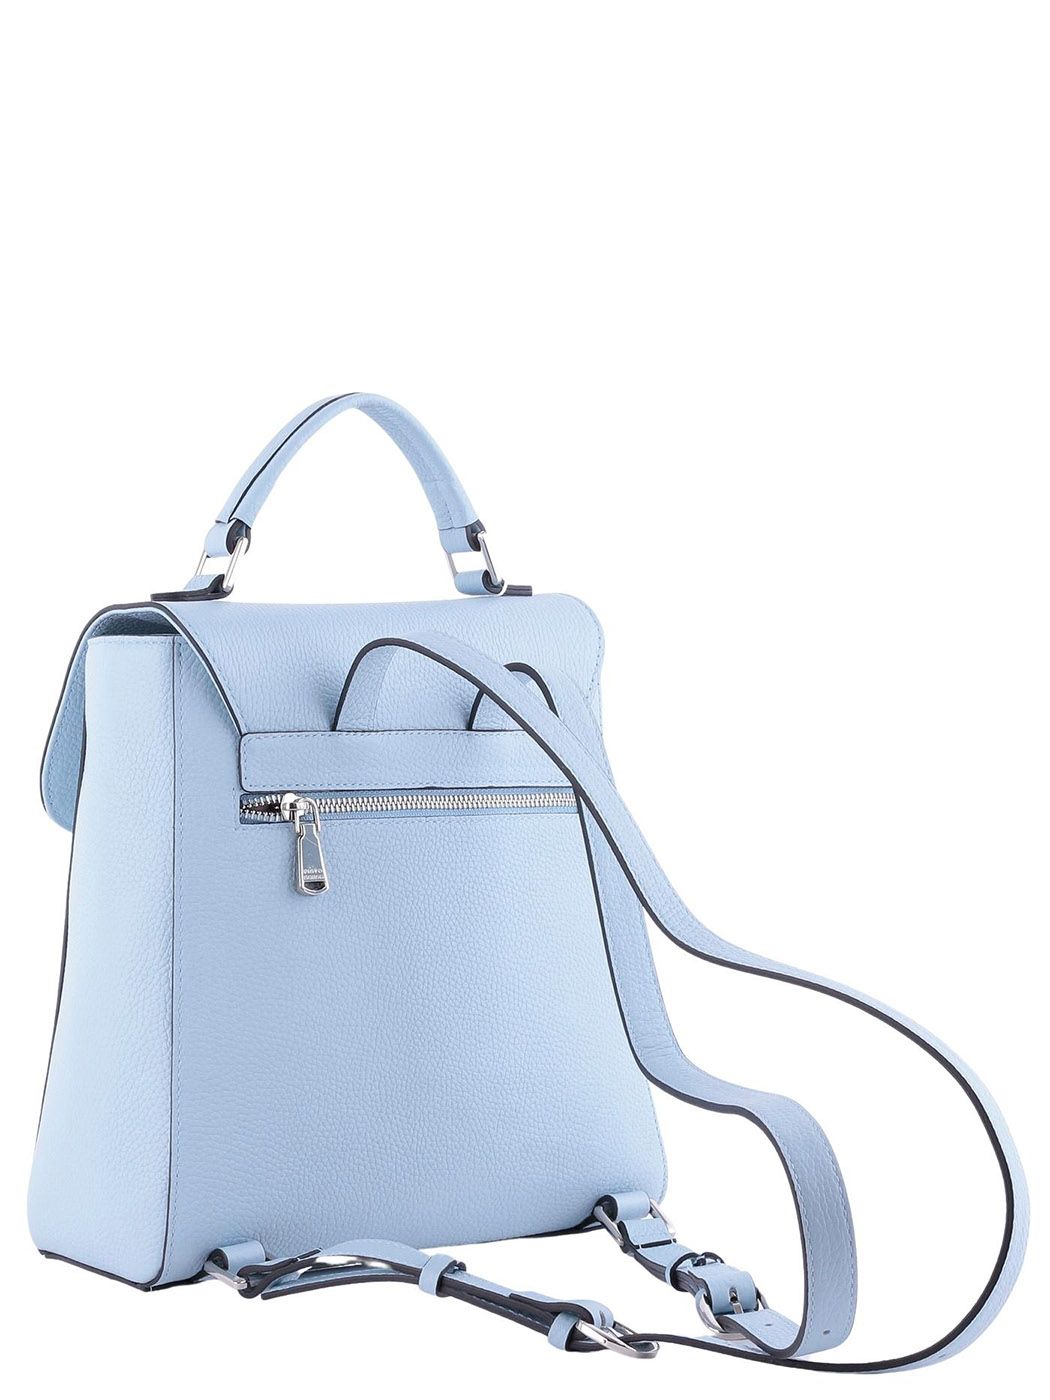 14300 FD гол рюкзак  жен. летн. натуральная кожа/текстиль голубой Fiato Dream